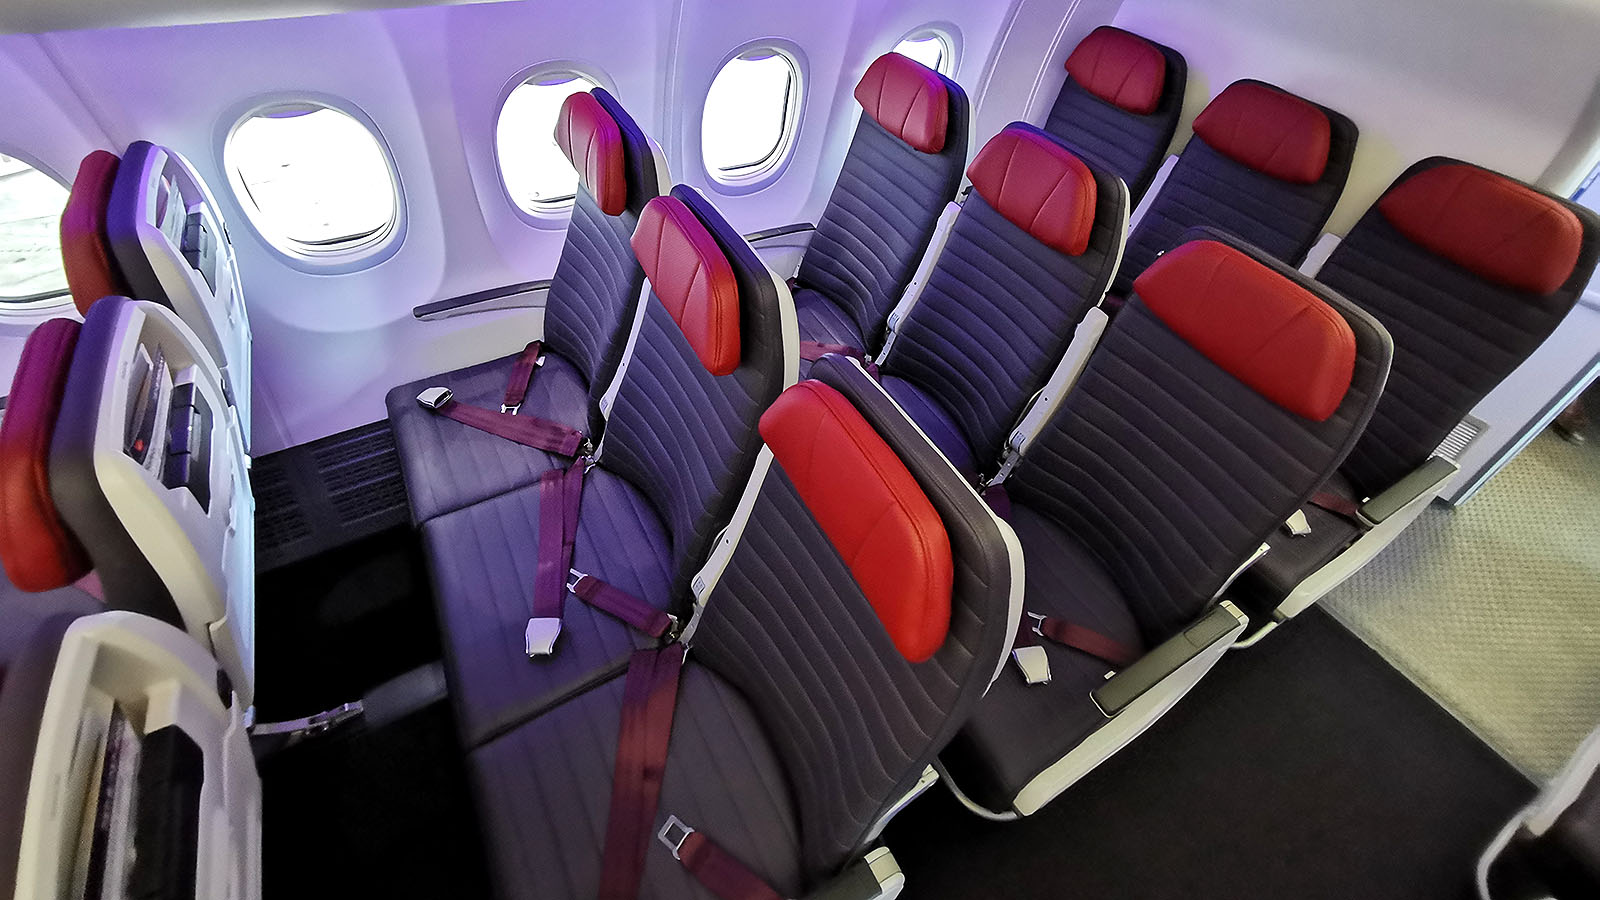 Virgin Australia Boeing 737 MAX 8 Economy Class seating